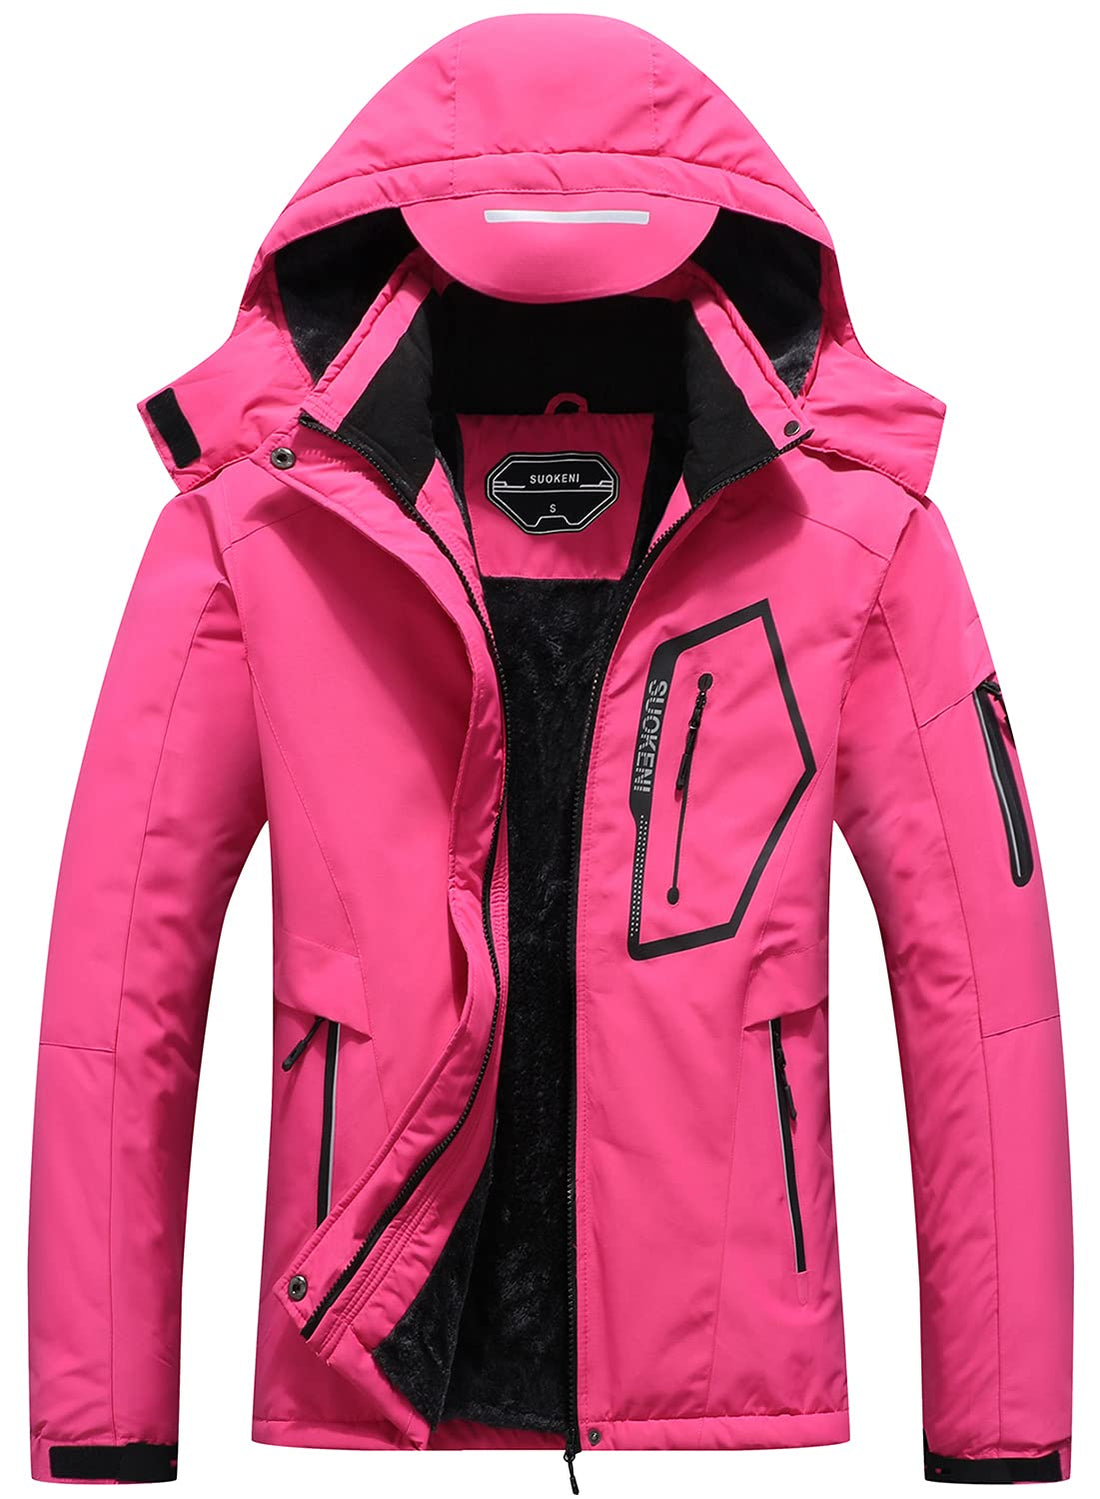 SUOKENI Women's Waterproof Warm Winter Snow Coat Hooded Raincoat Ski Snowboarding Jacket, Rose Red, Small